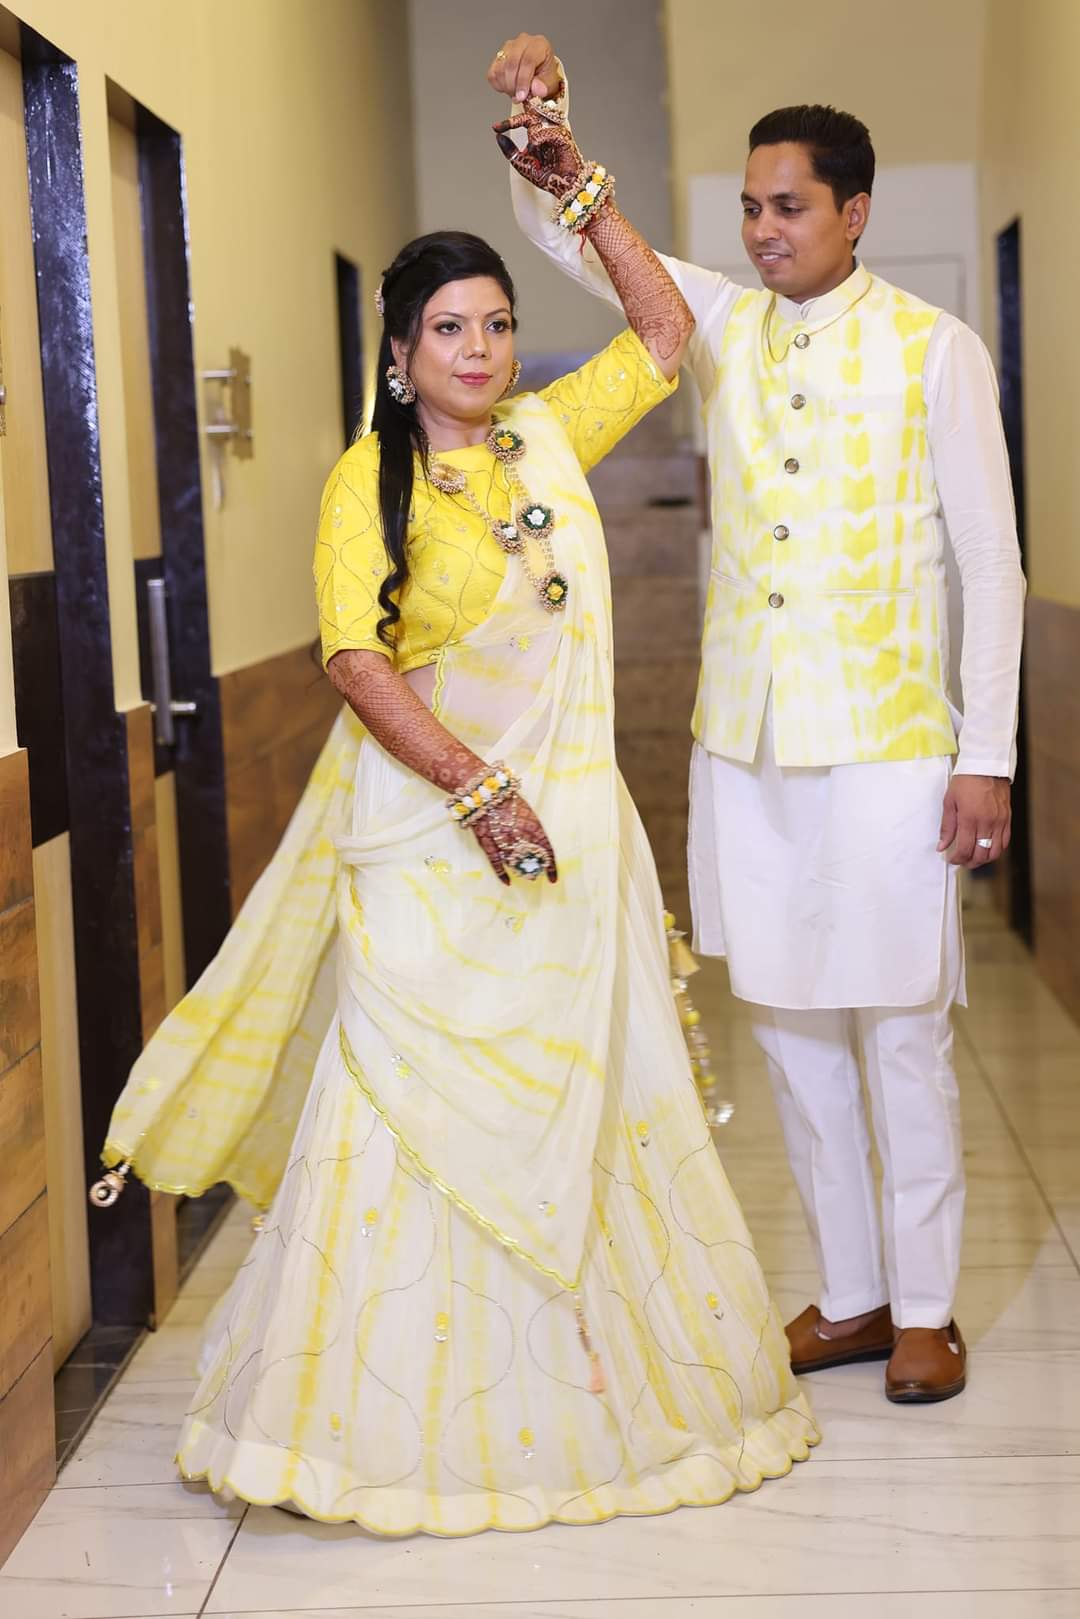 Lamansh latest floral set Yellow White Gold / Free size / Bridal Style LAMANSH® Bridal Floral 🌺 Jewellery set for Haldi